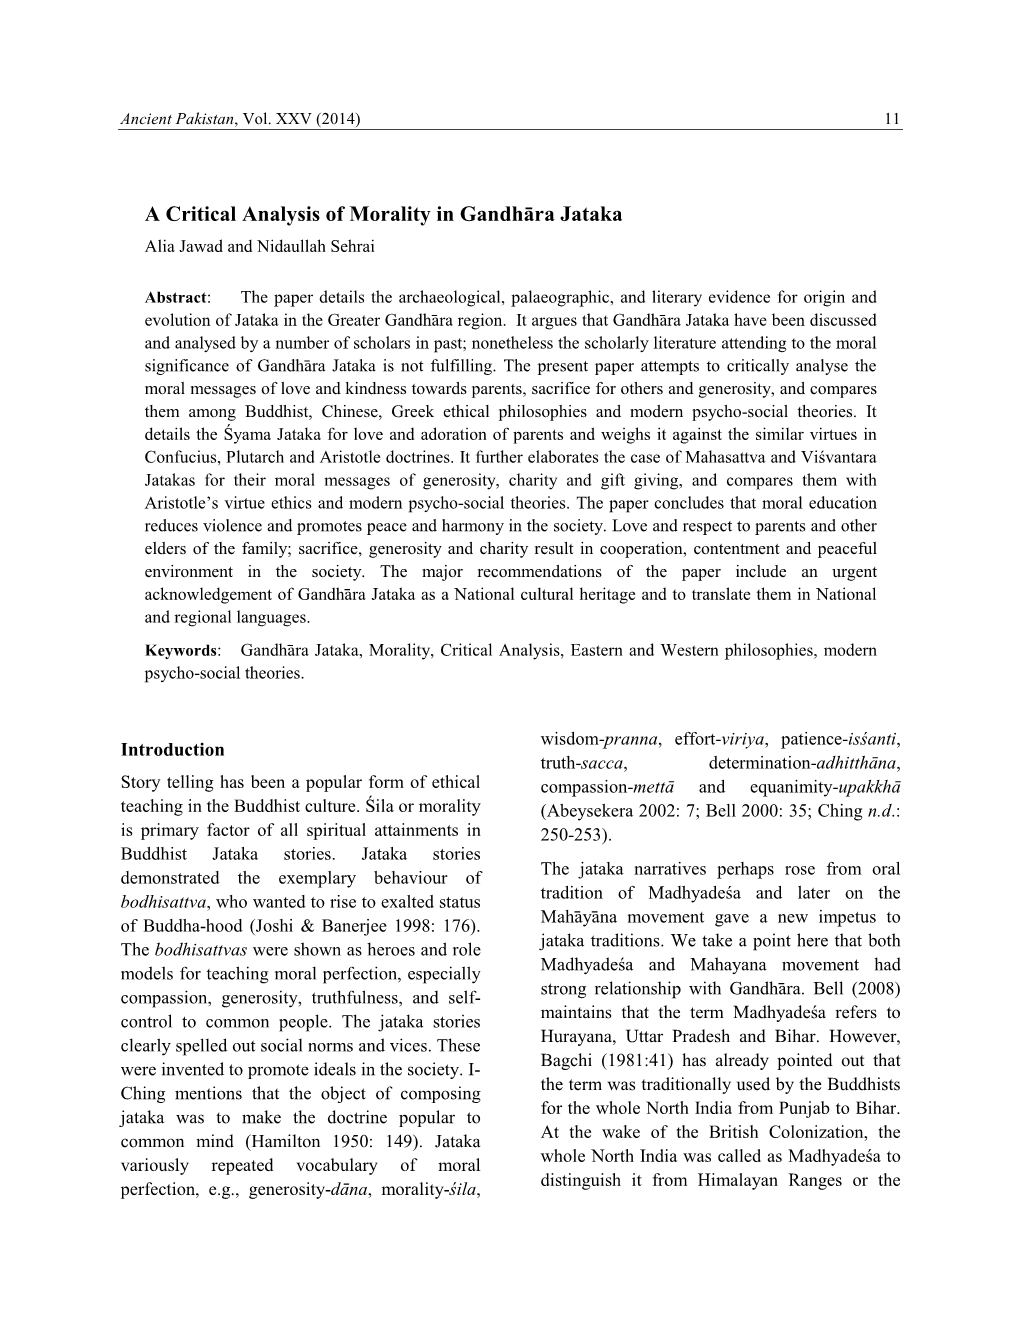 A Critical Analysis of Morality in Gandhāra Jataka Alia Jawad and Nidaullah Sehrai